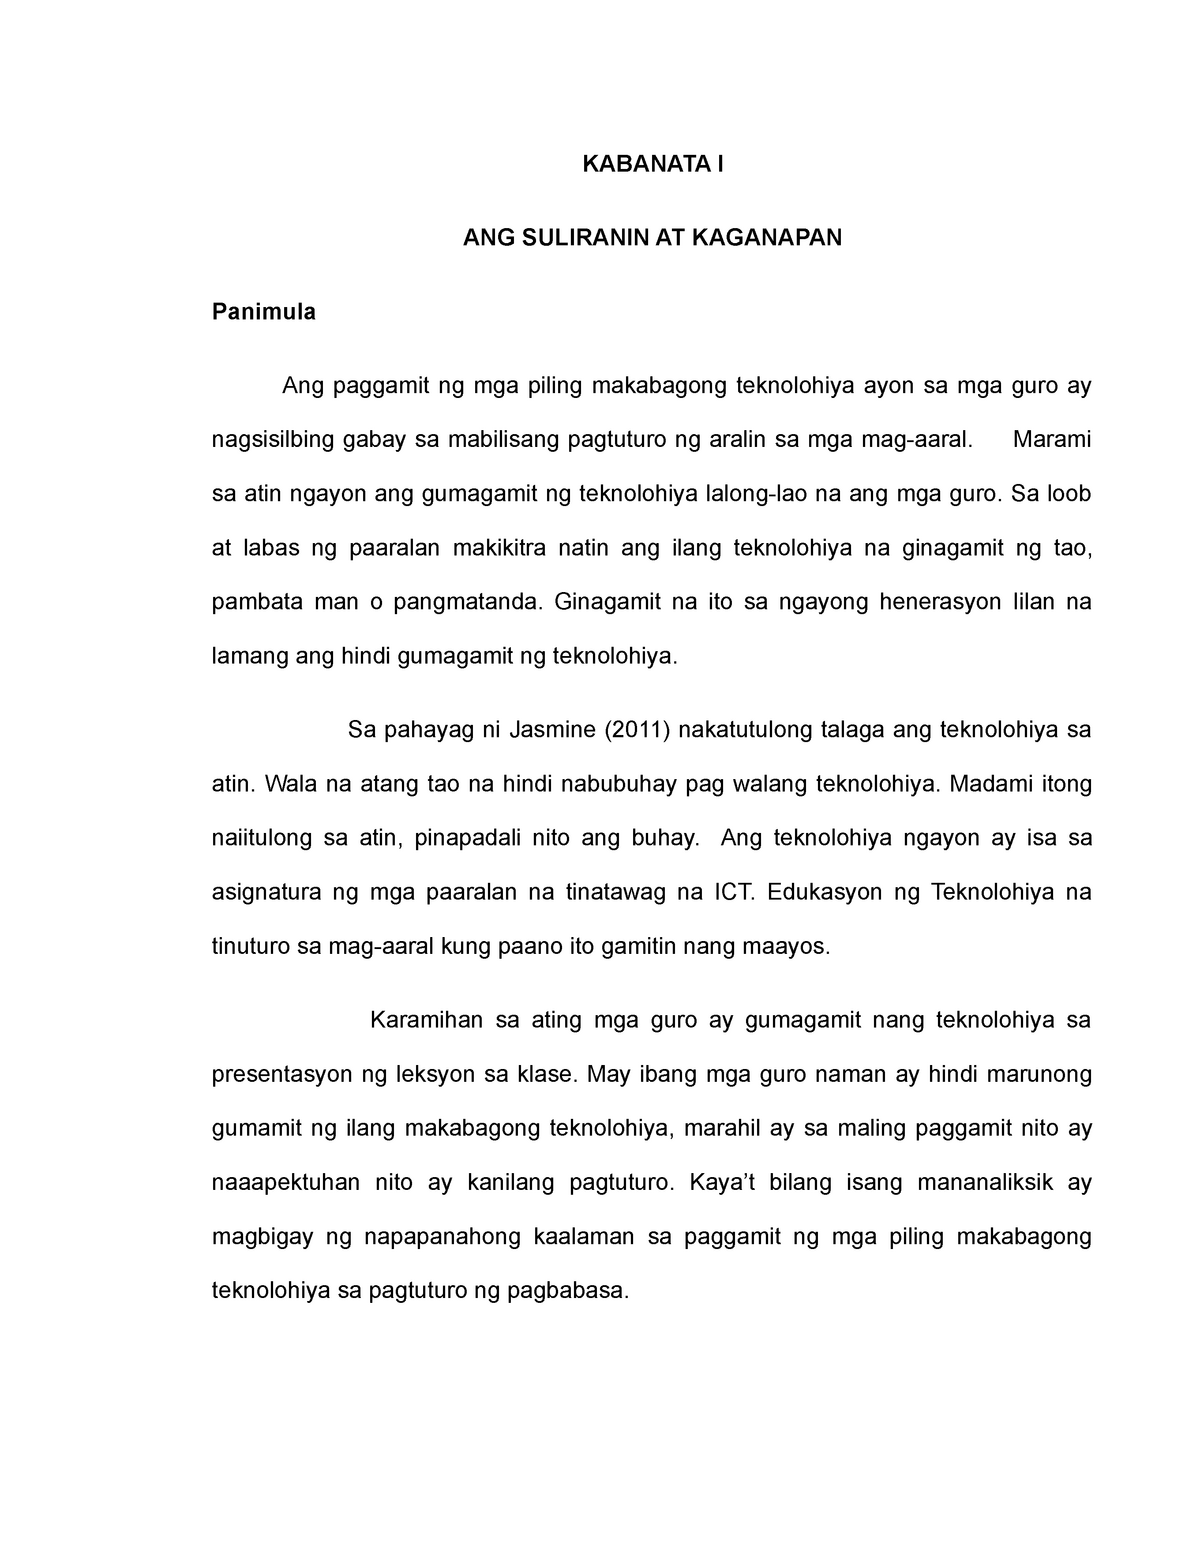 thesis statement halimbawa